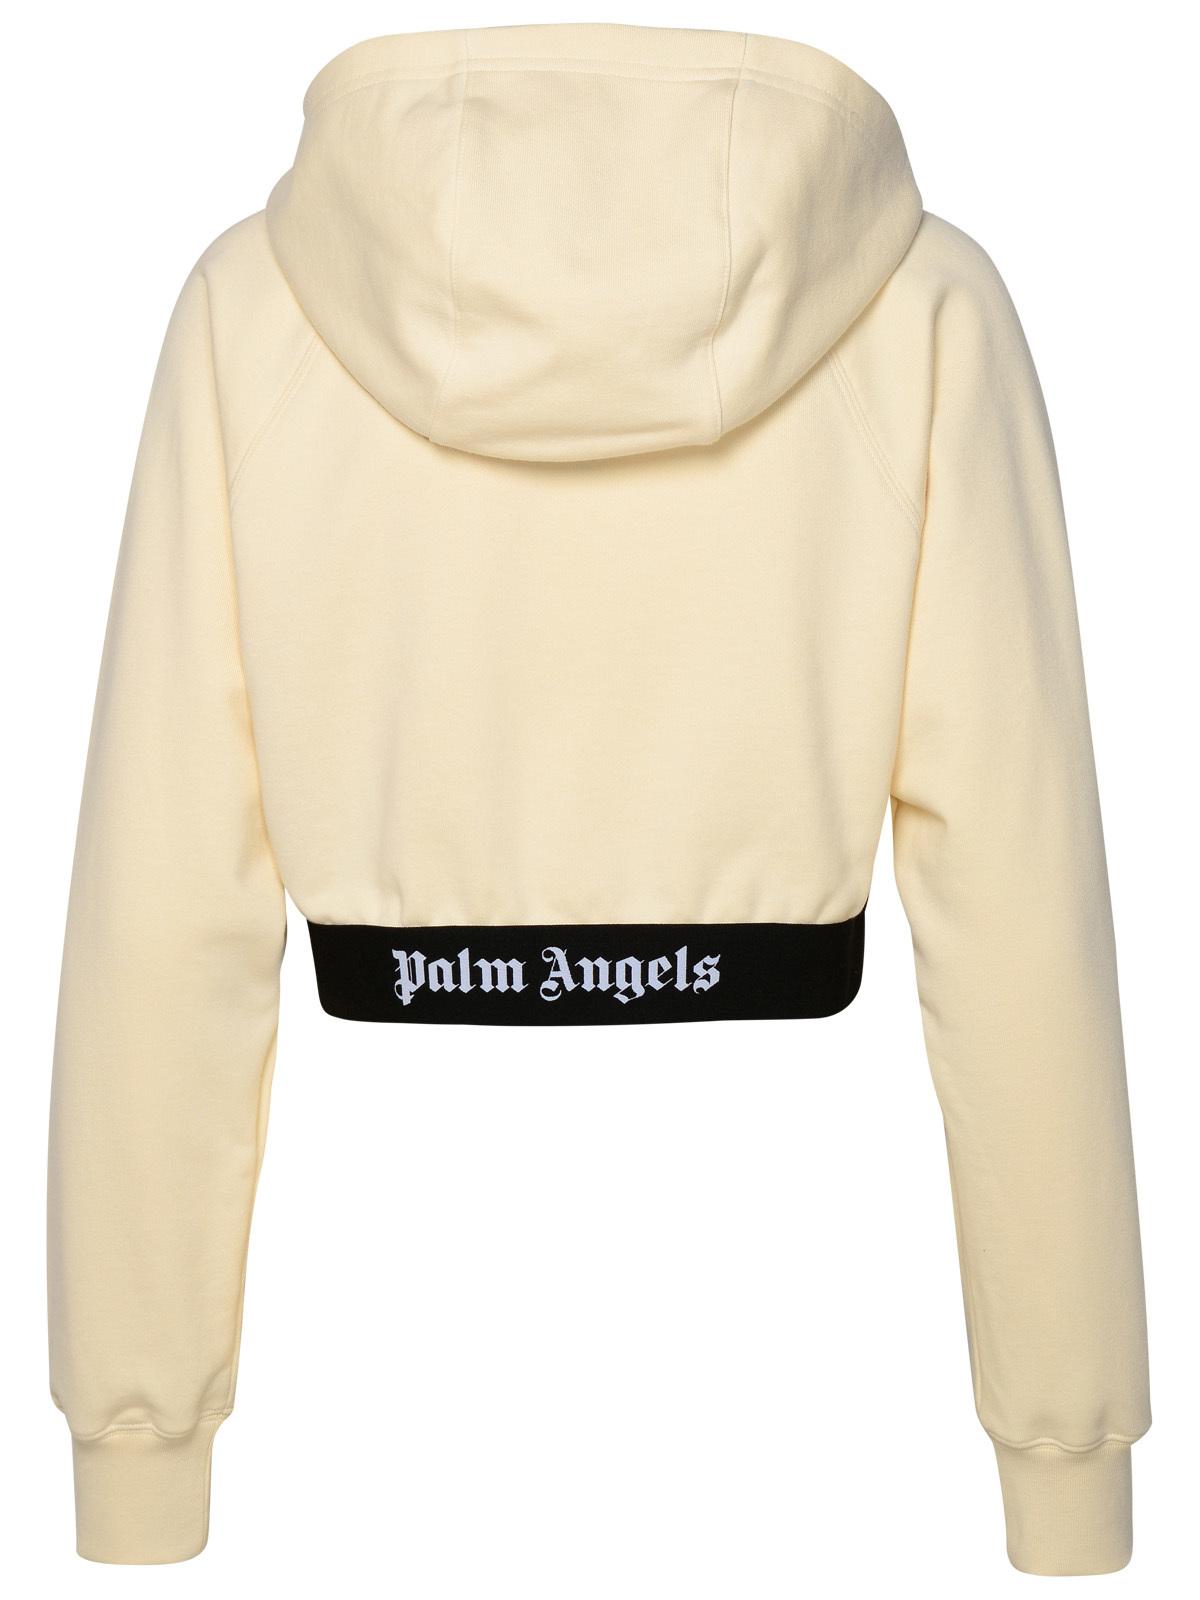 Palm Angels Ivory Cotton Sweatshirt Woman